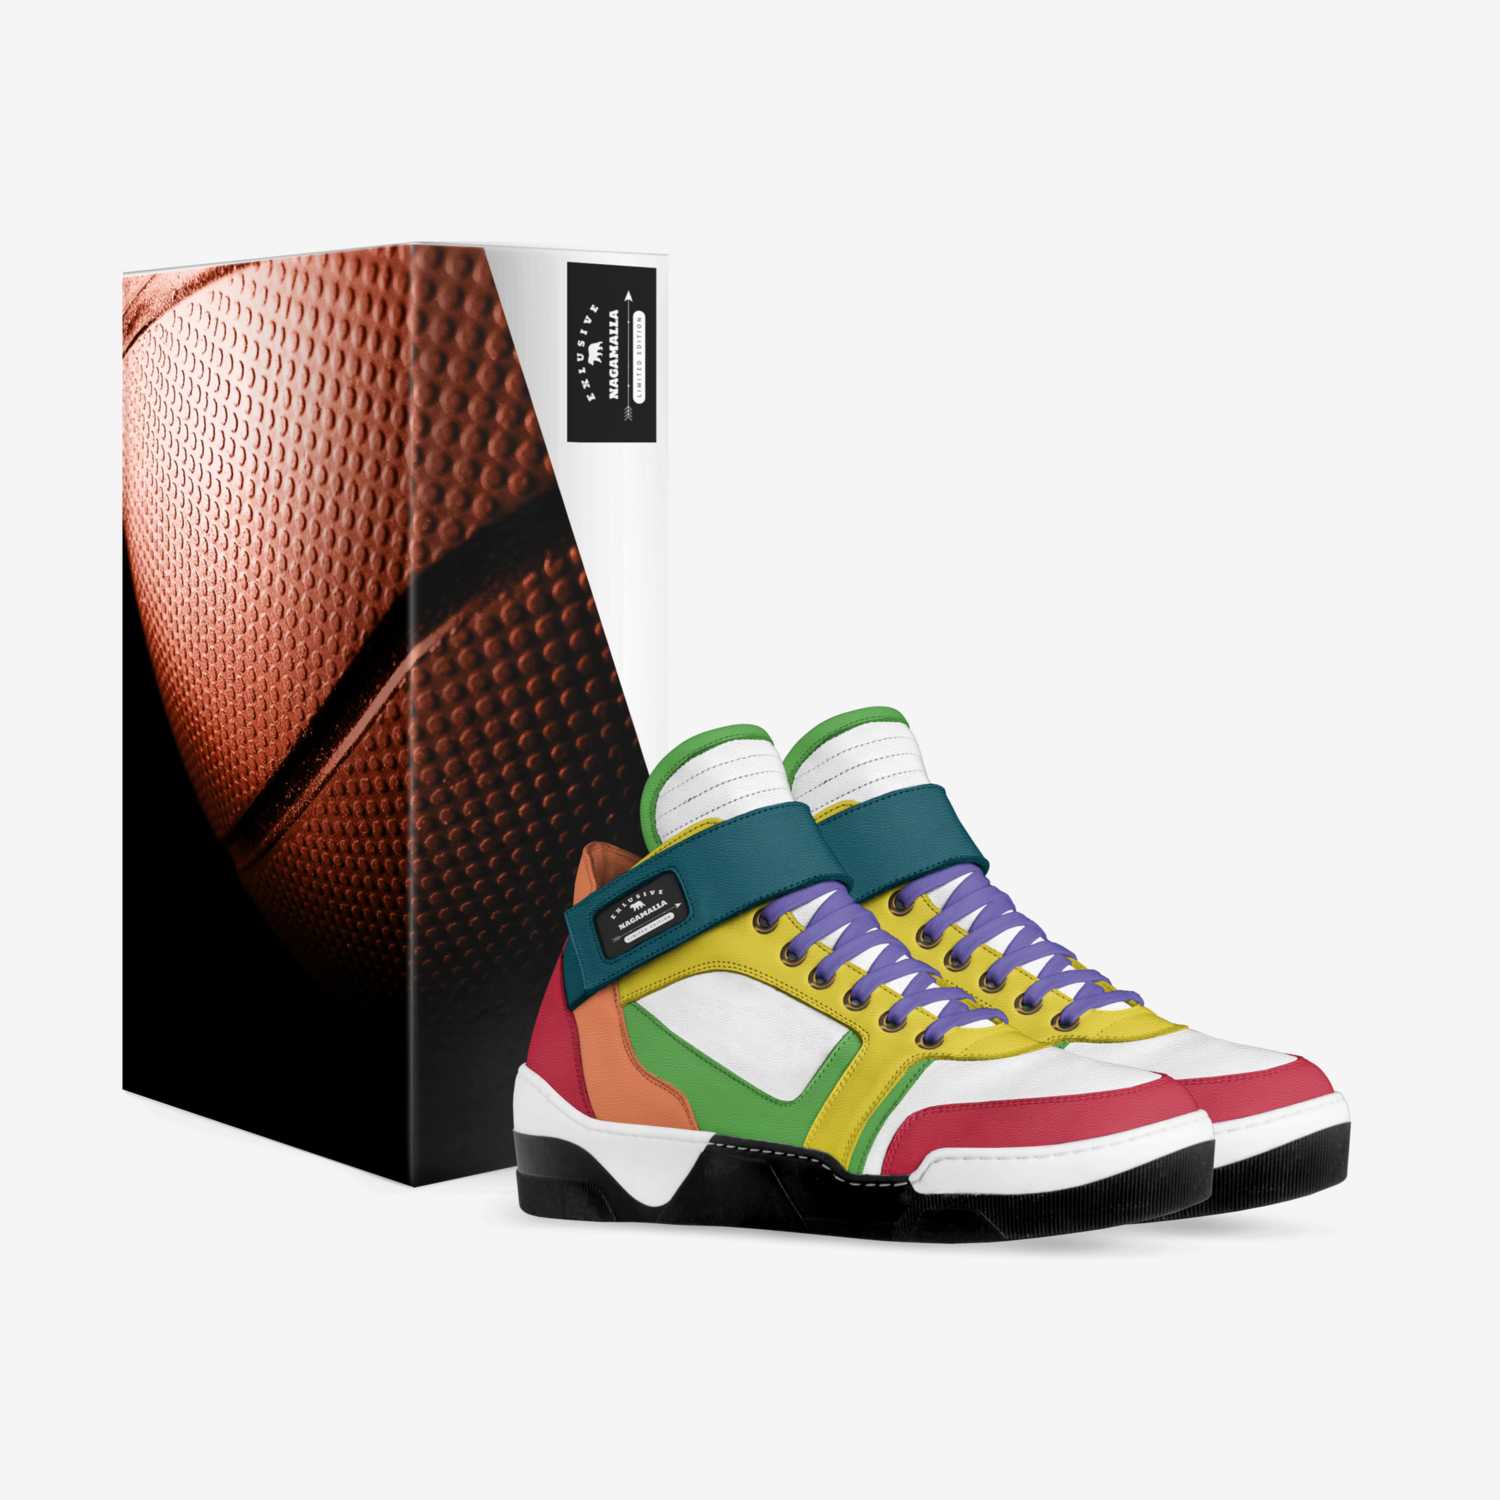 Nagamalla custom made in Italy shoes by Jonathan Nagamalla | Box view